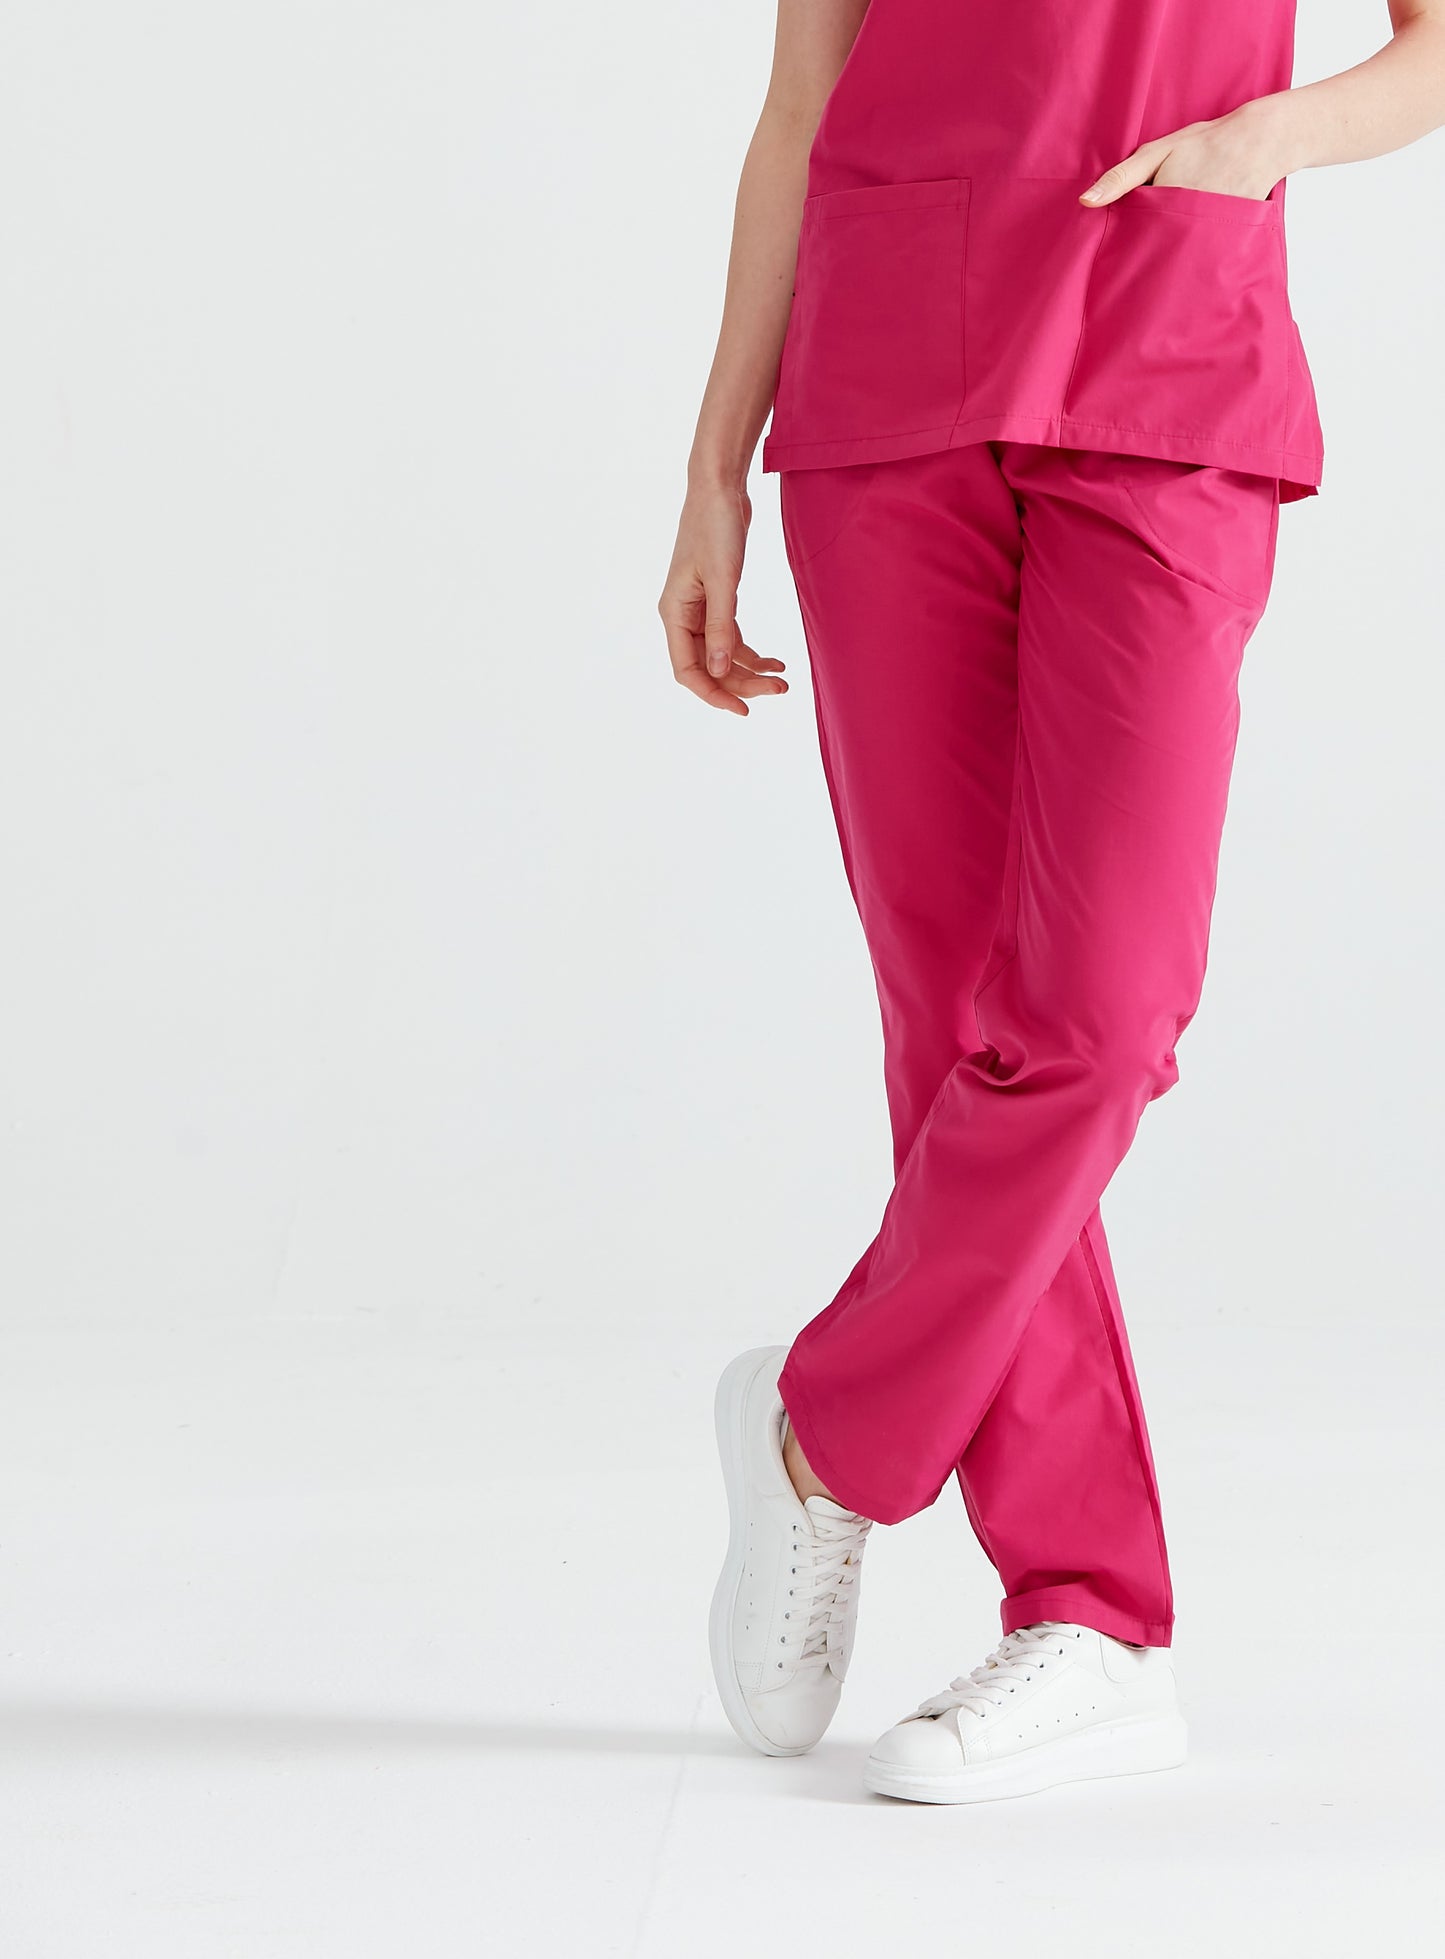 Asistenta medicala imbracata in pantaloni Fuchsia, cu picioarele incrucisate, vedere din fata